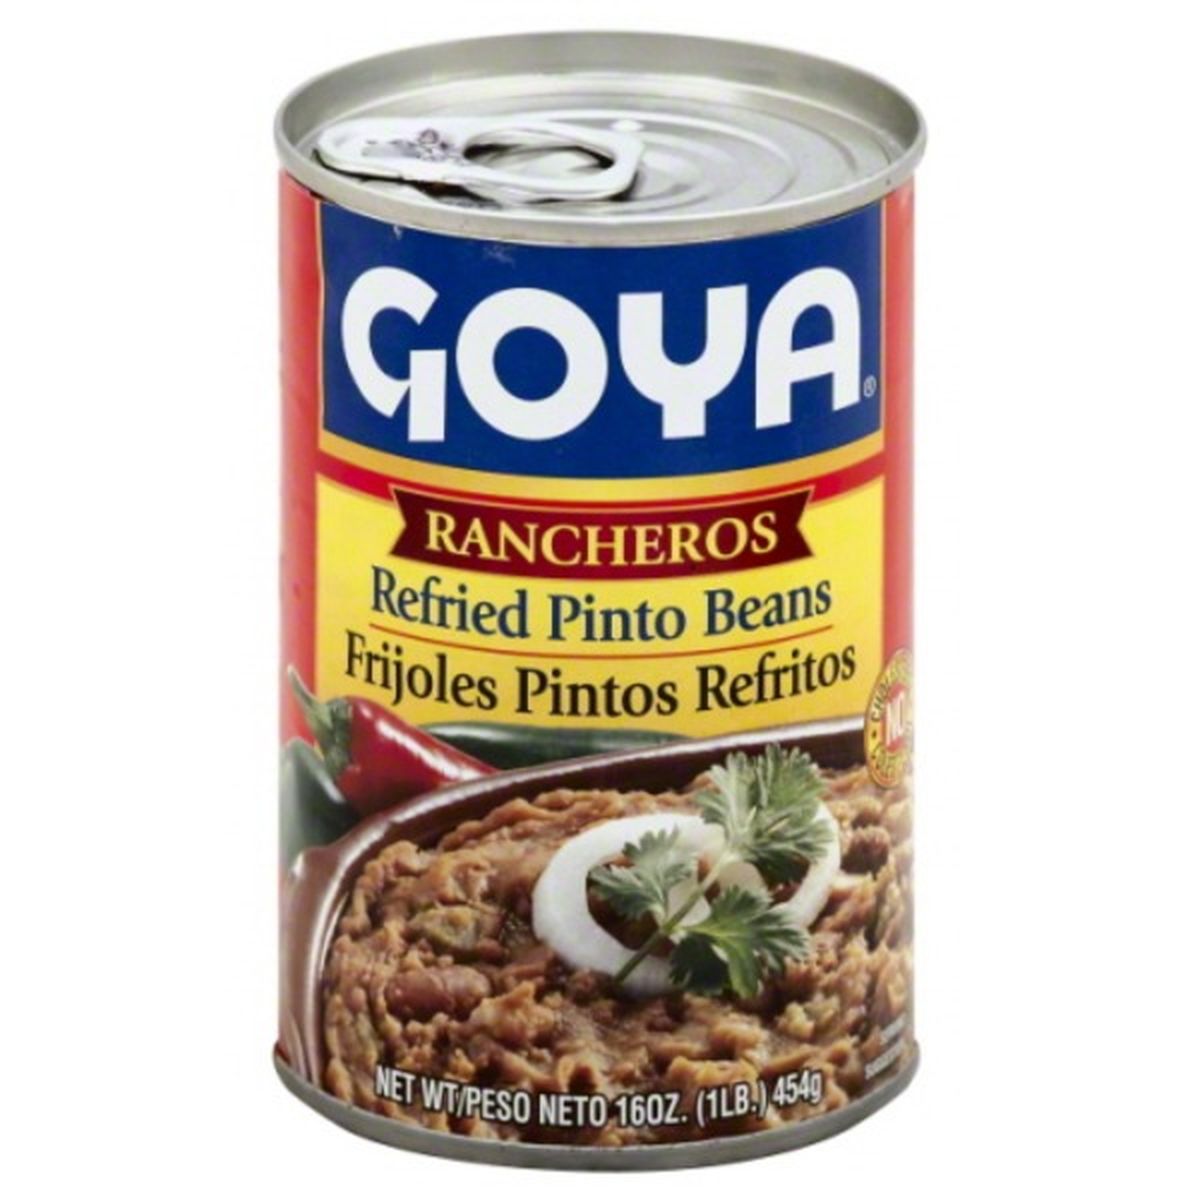 Calories in Goya Rancheros Pinto Beans, Refried